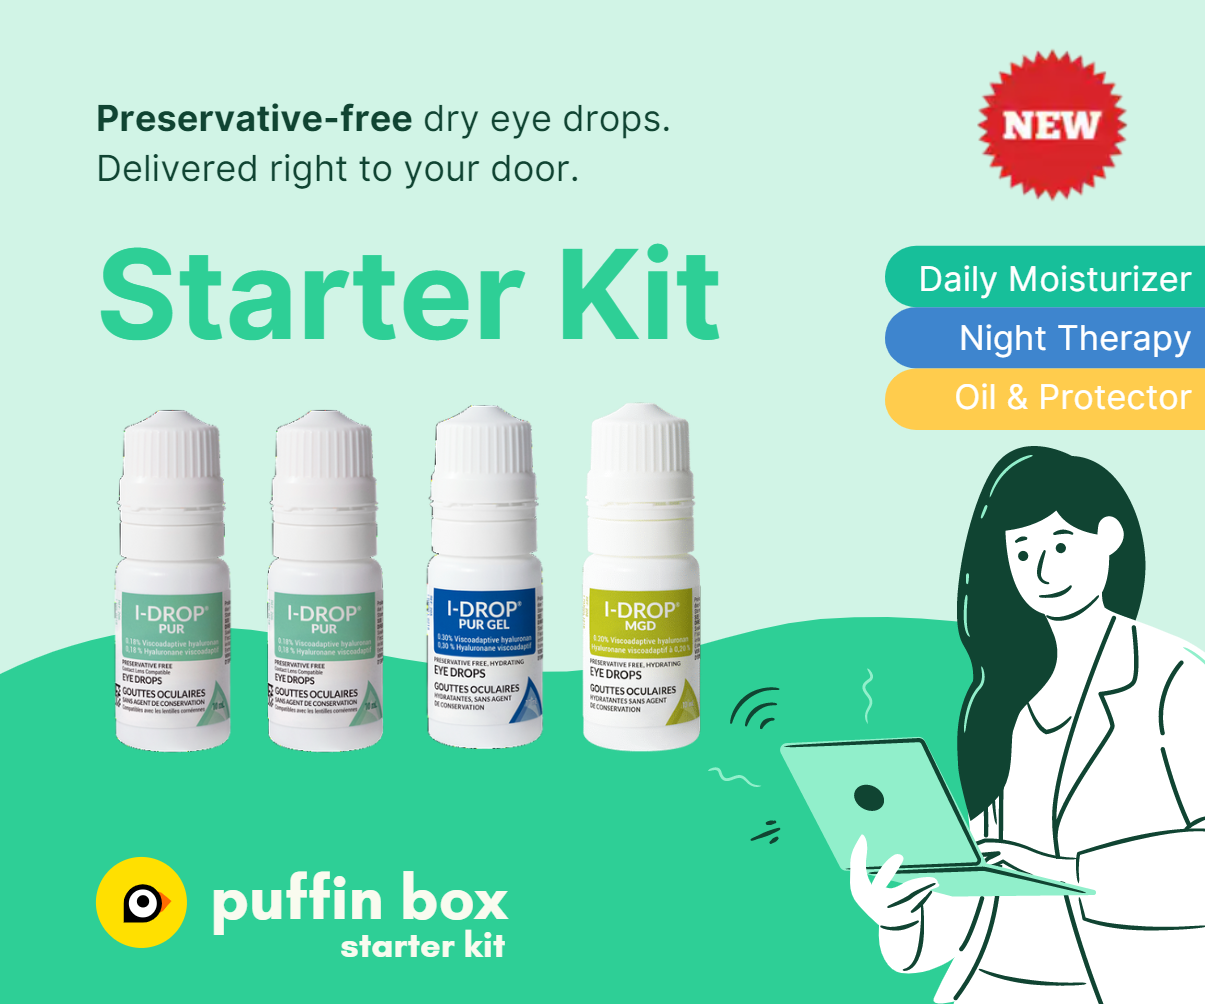 STARTER KIT ® Preservative-Free Eye Drops